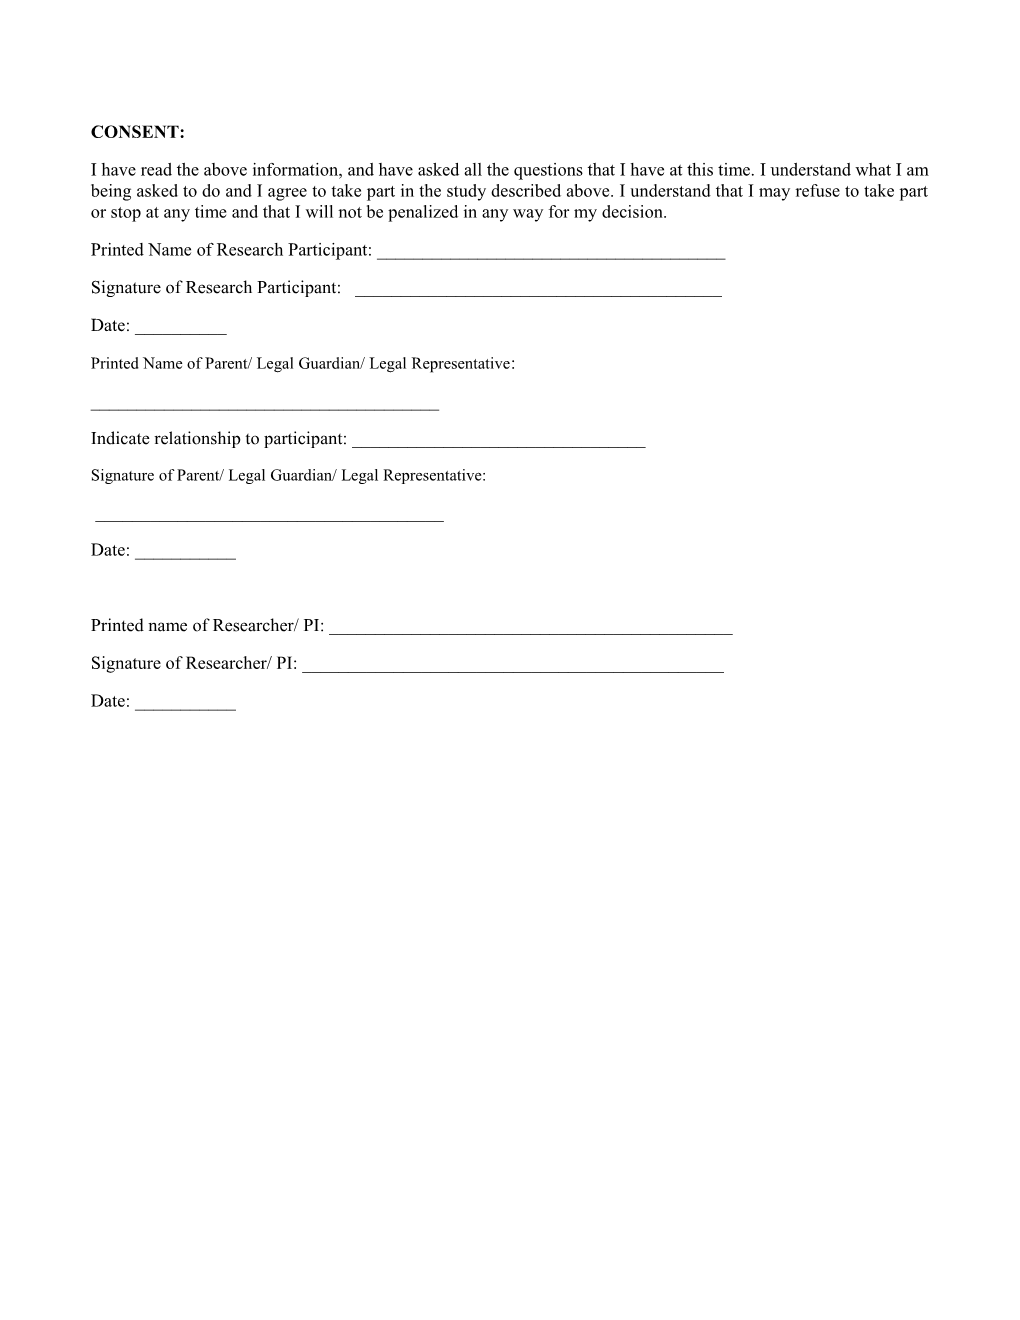 Informed Consent Form Rev. 9/8/09